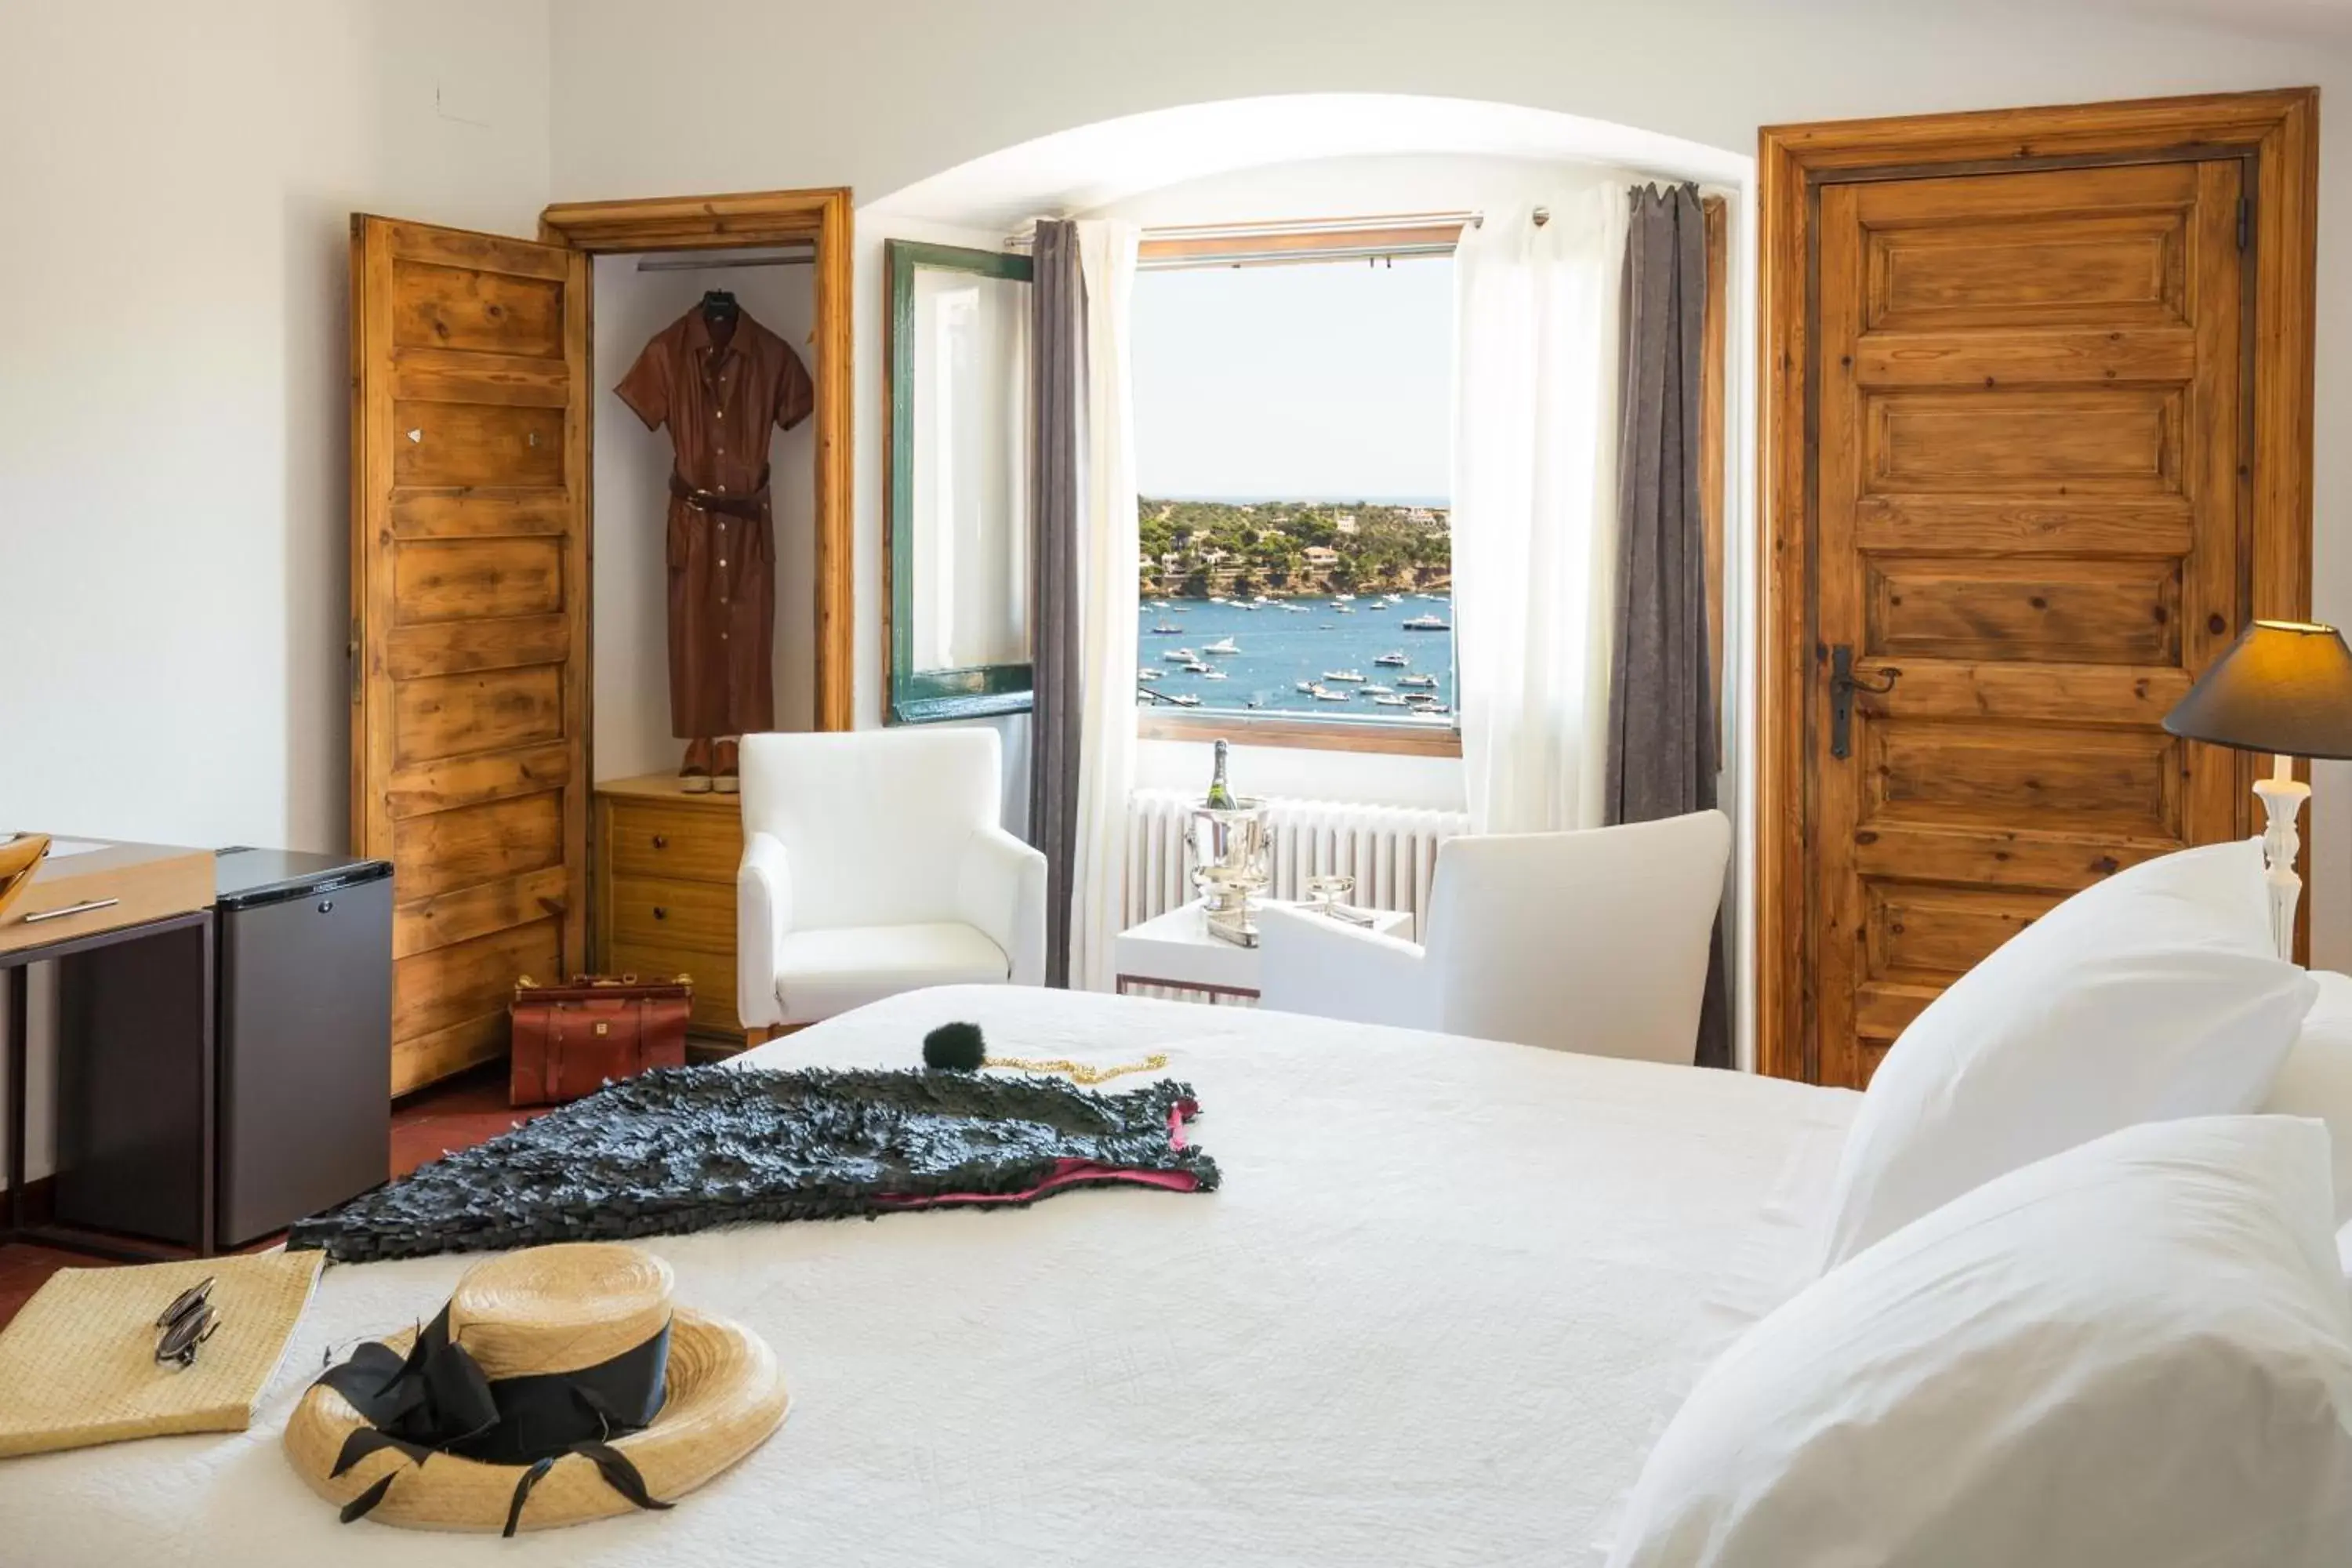 Double Room with Sea View in Hotel Rec de Palau